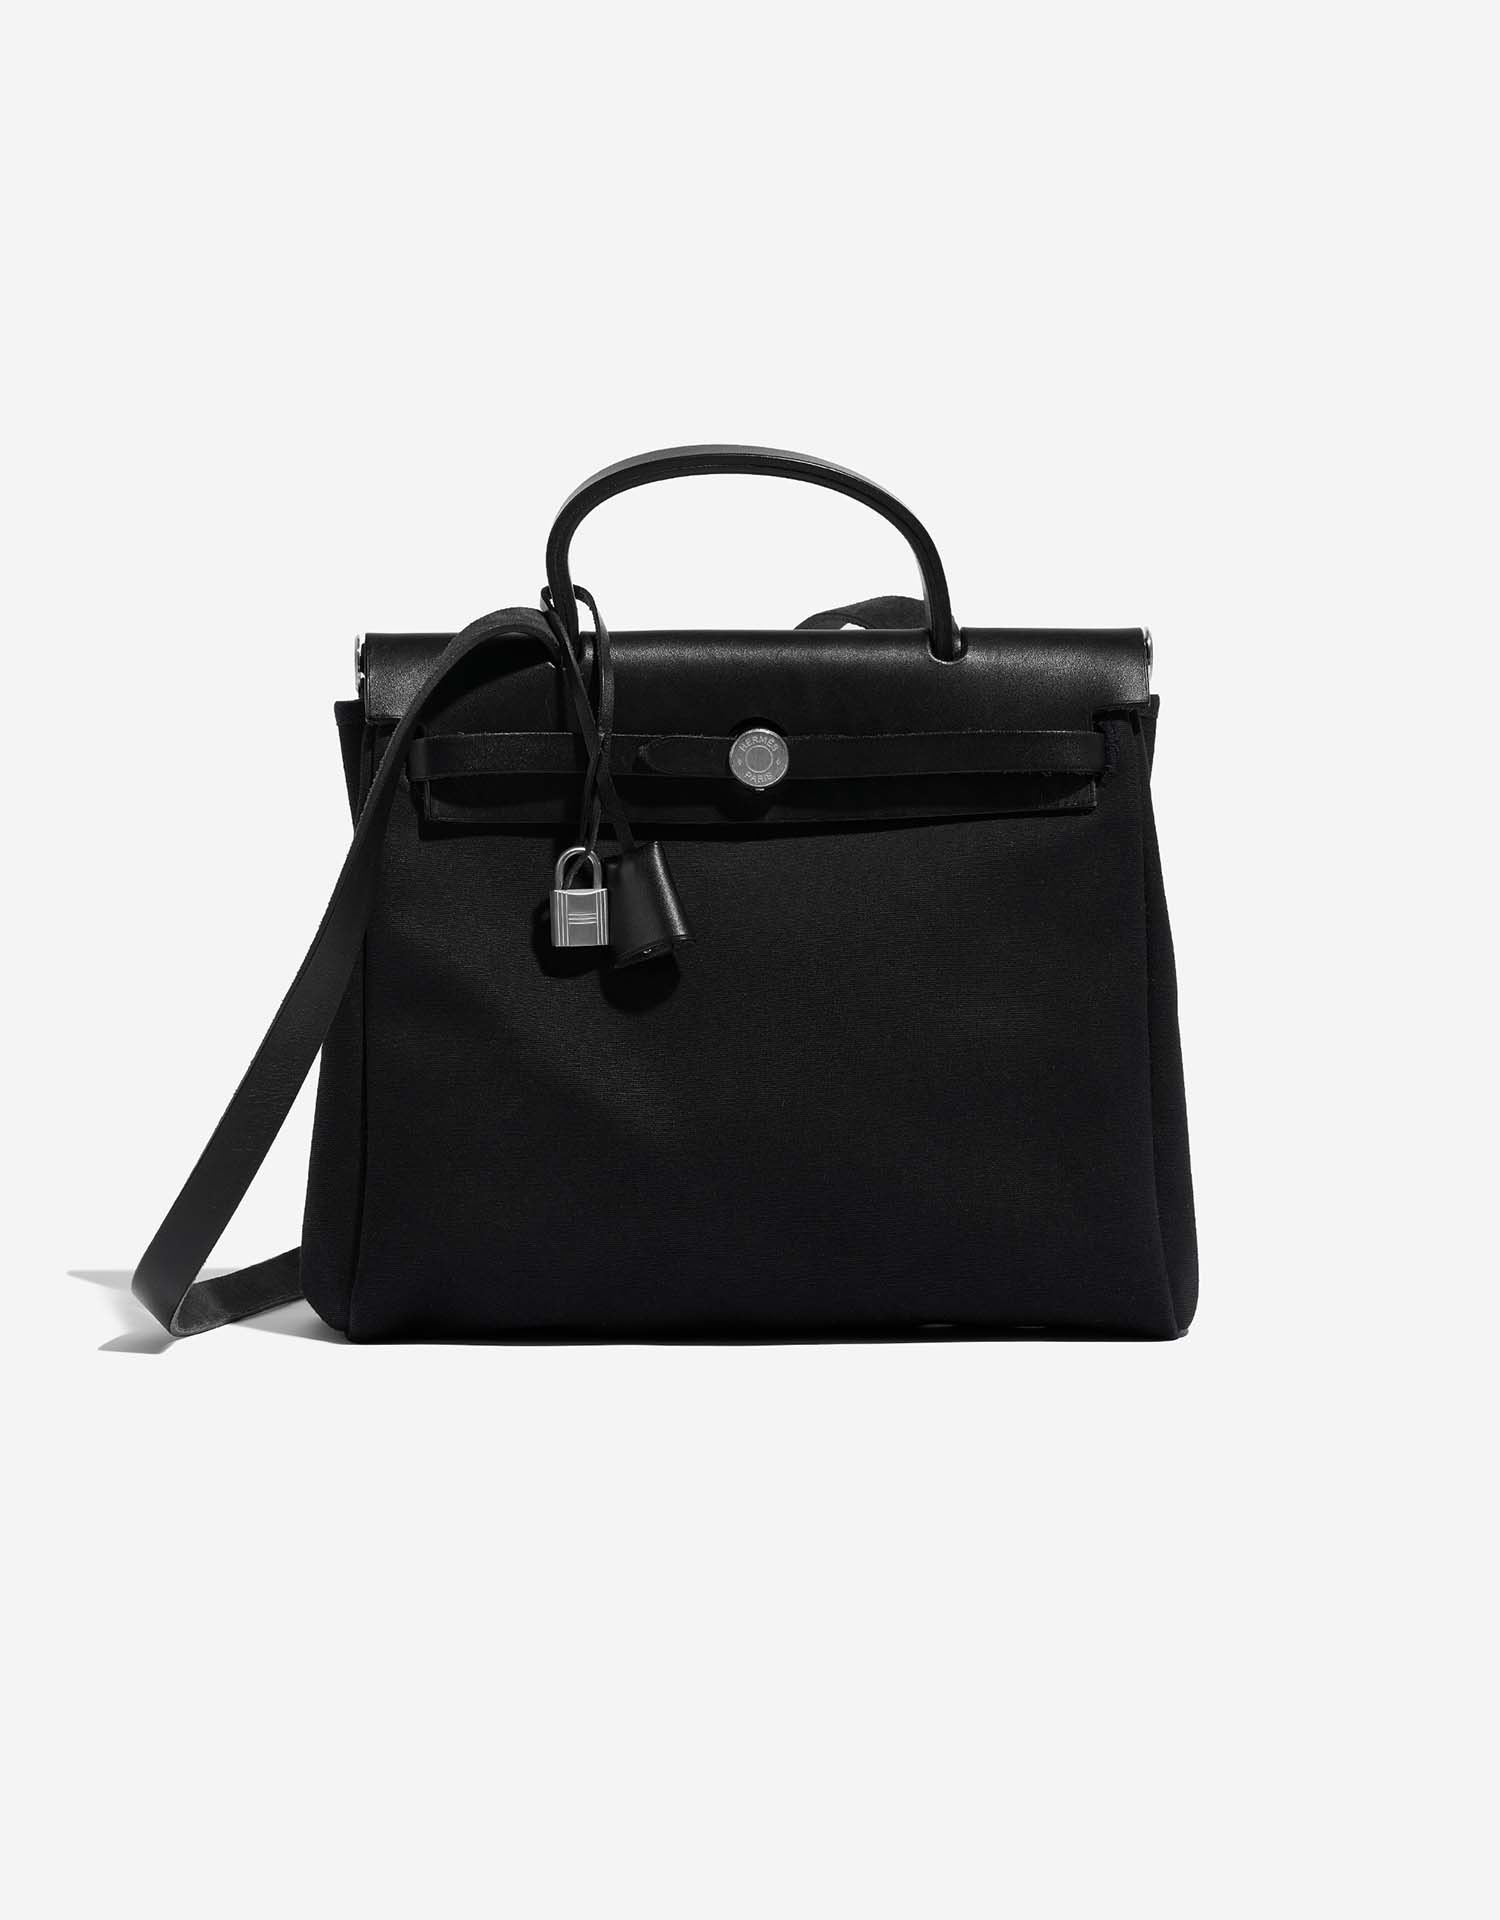 Hermès Authenticated Leather Handbag